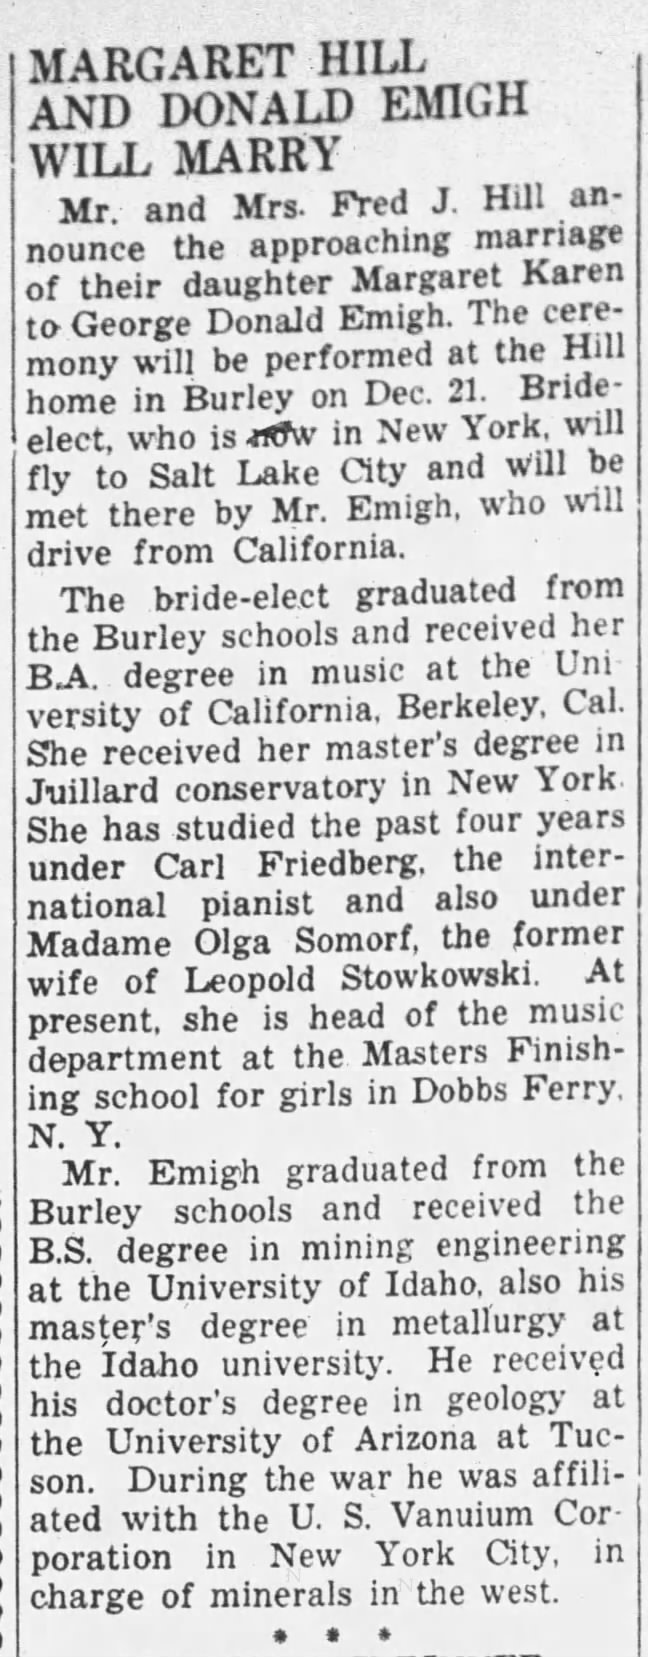 Burley Herald, Burley ID 12-5-1946 - engagement of Margaret and Donald